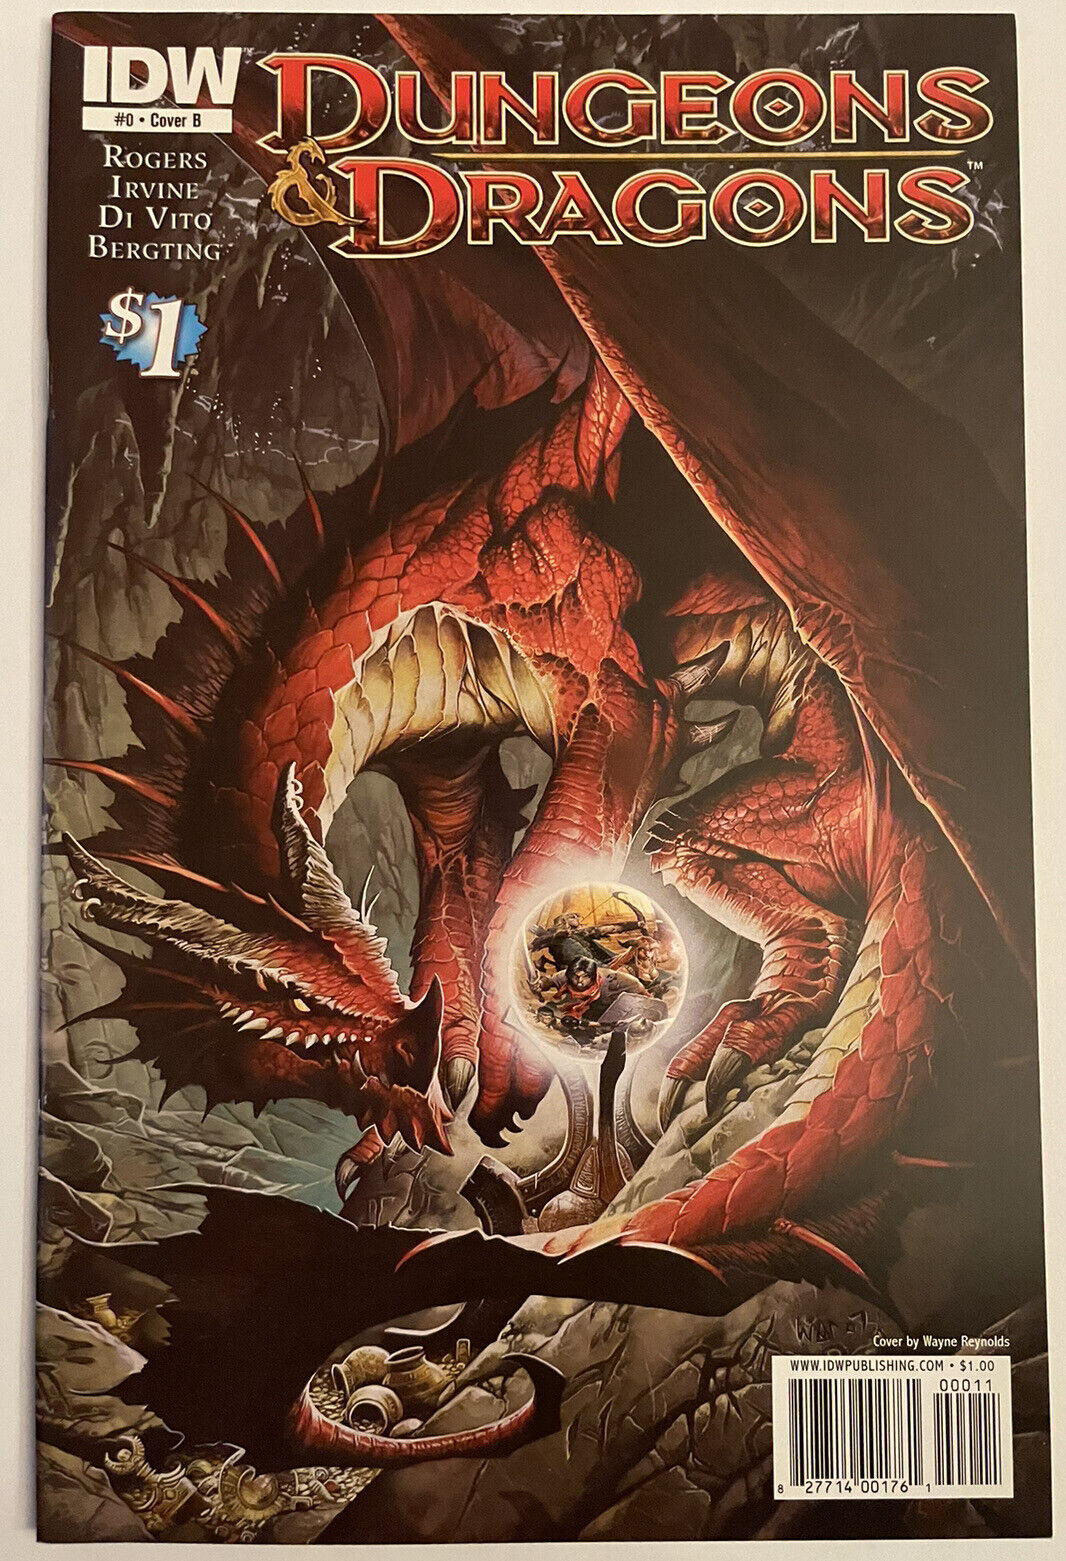 Dungeons & Dragons #0 Wayne Reynolds Variant Cover John Rogers (2010 IDW)